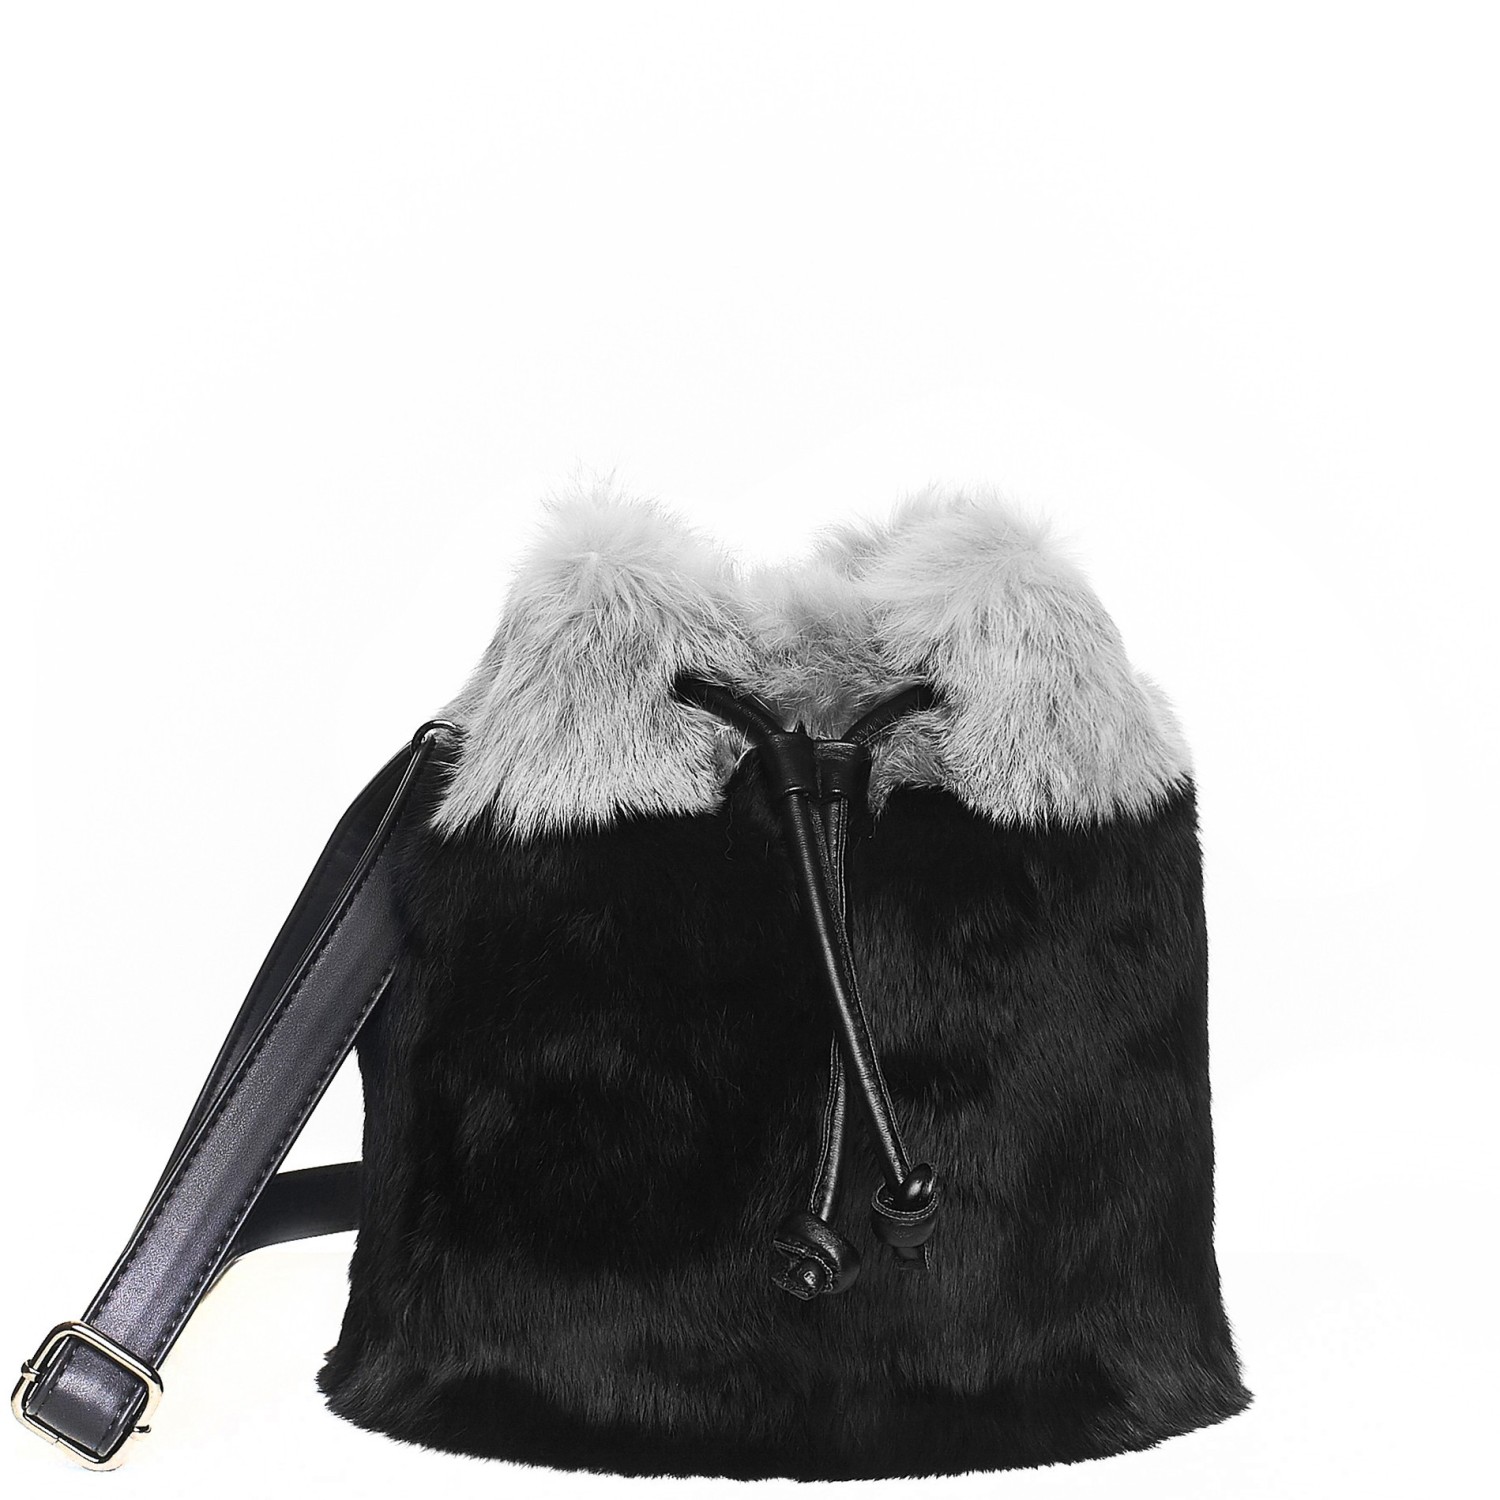 Fur bag "Contrastia" black&grey